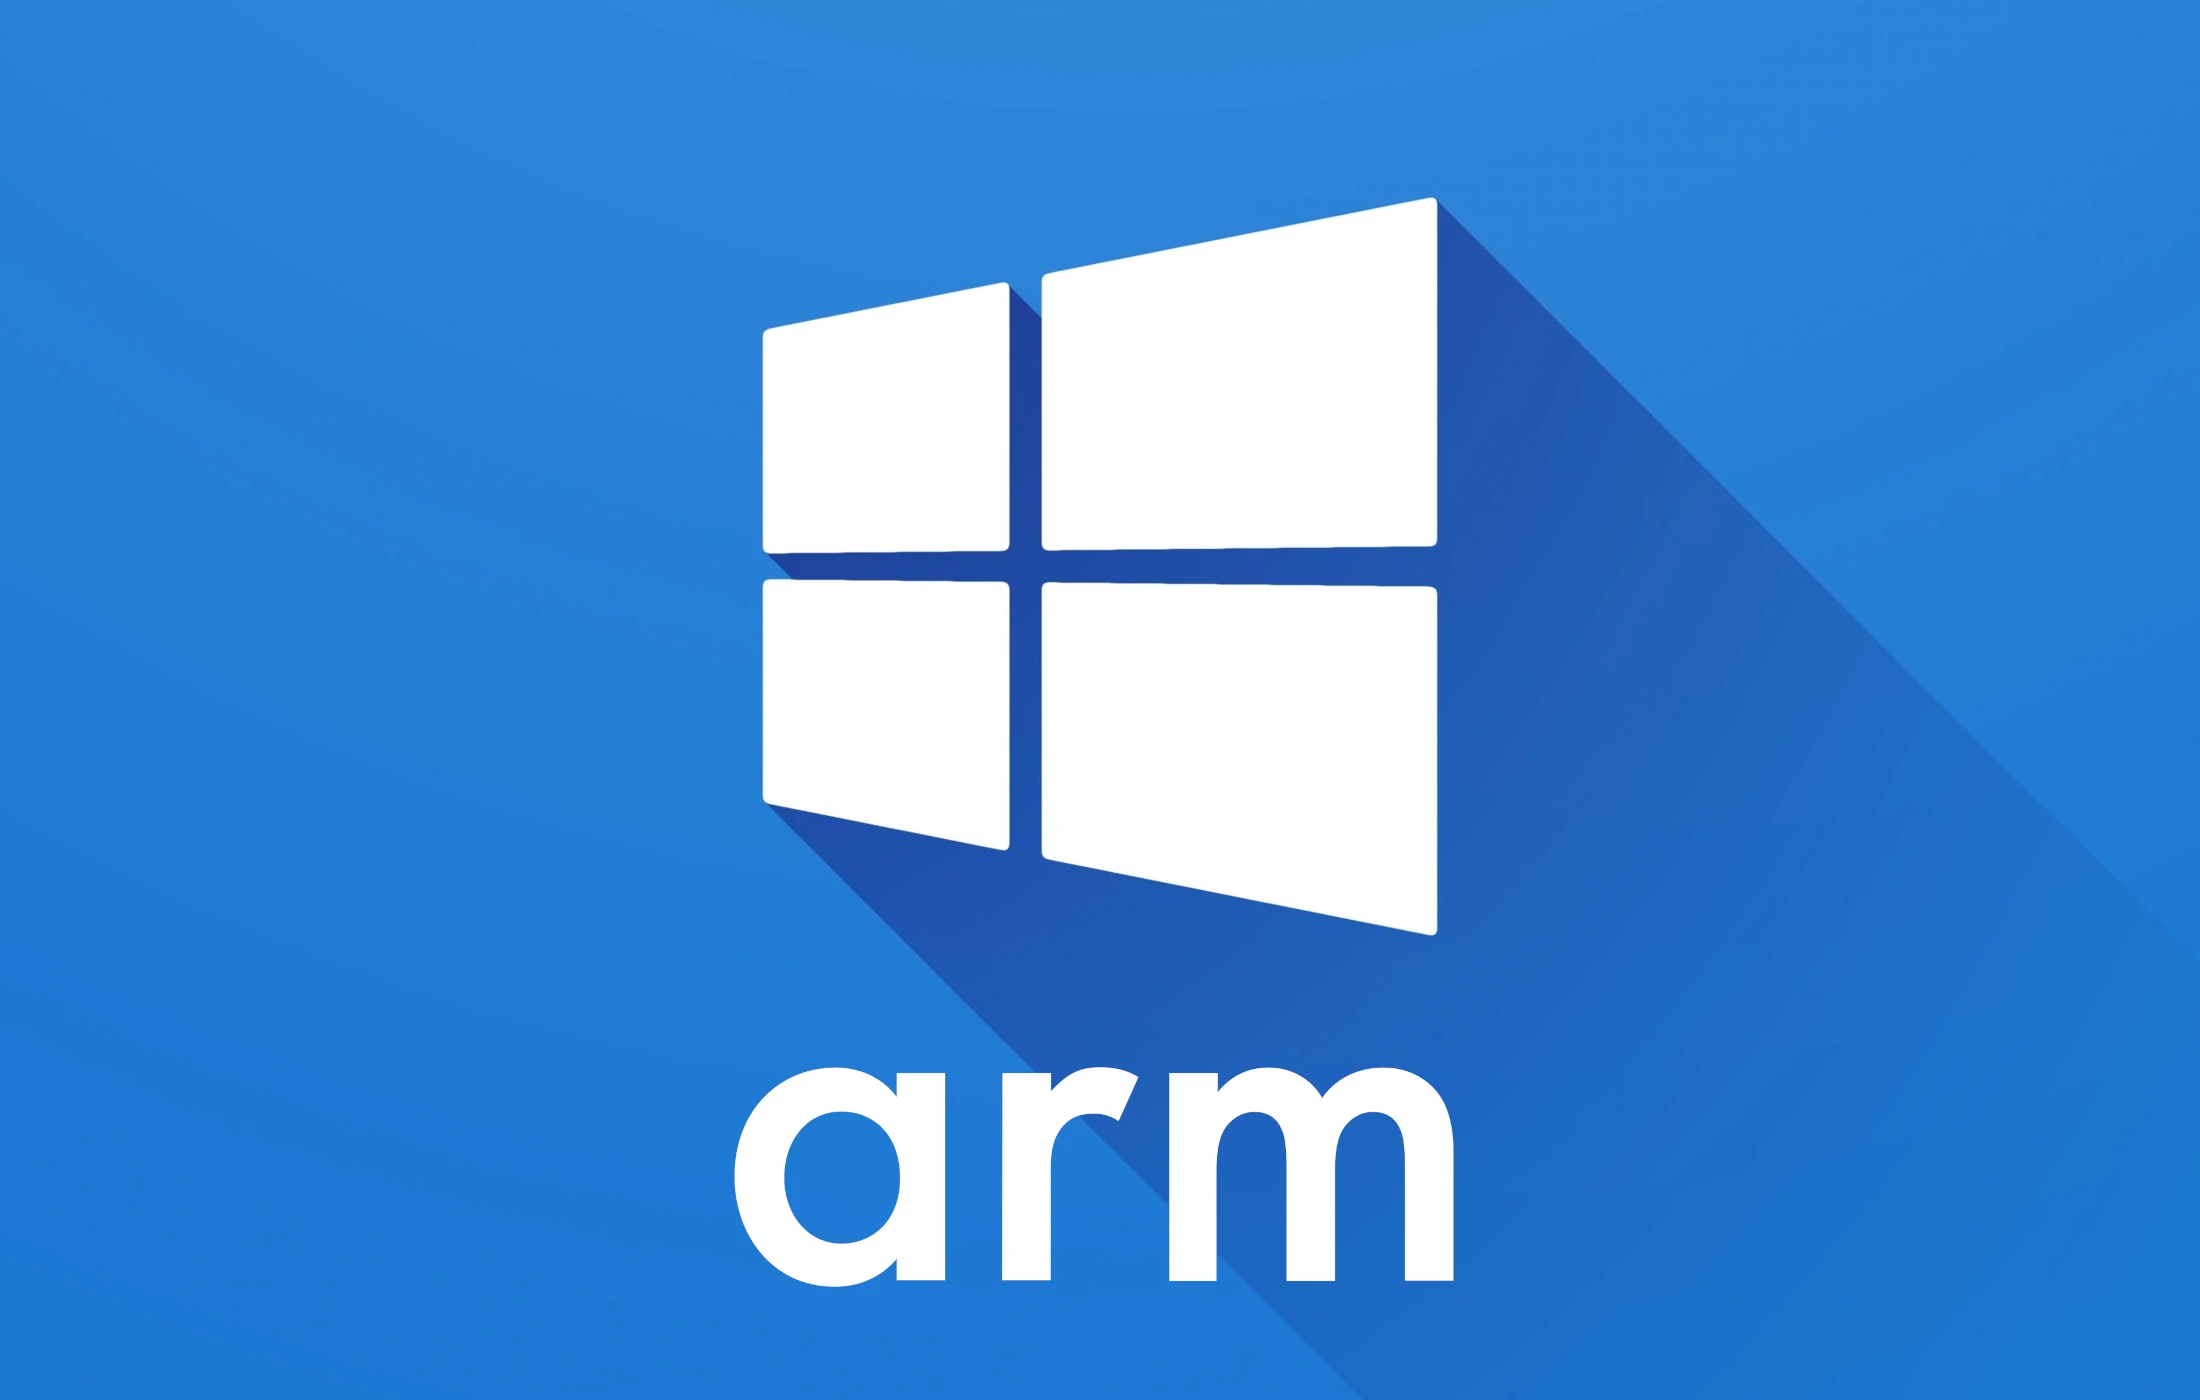 Windows Arm Logo